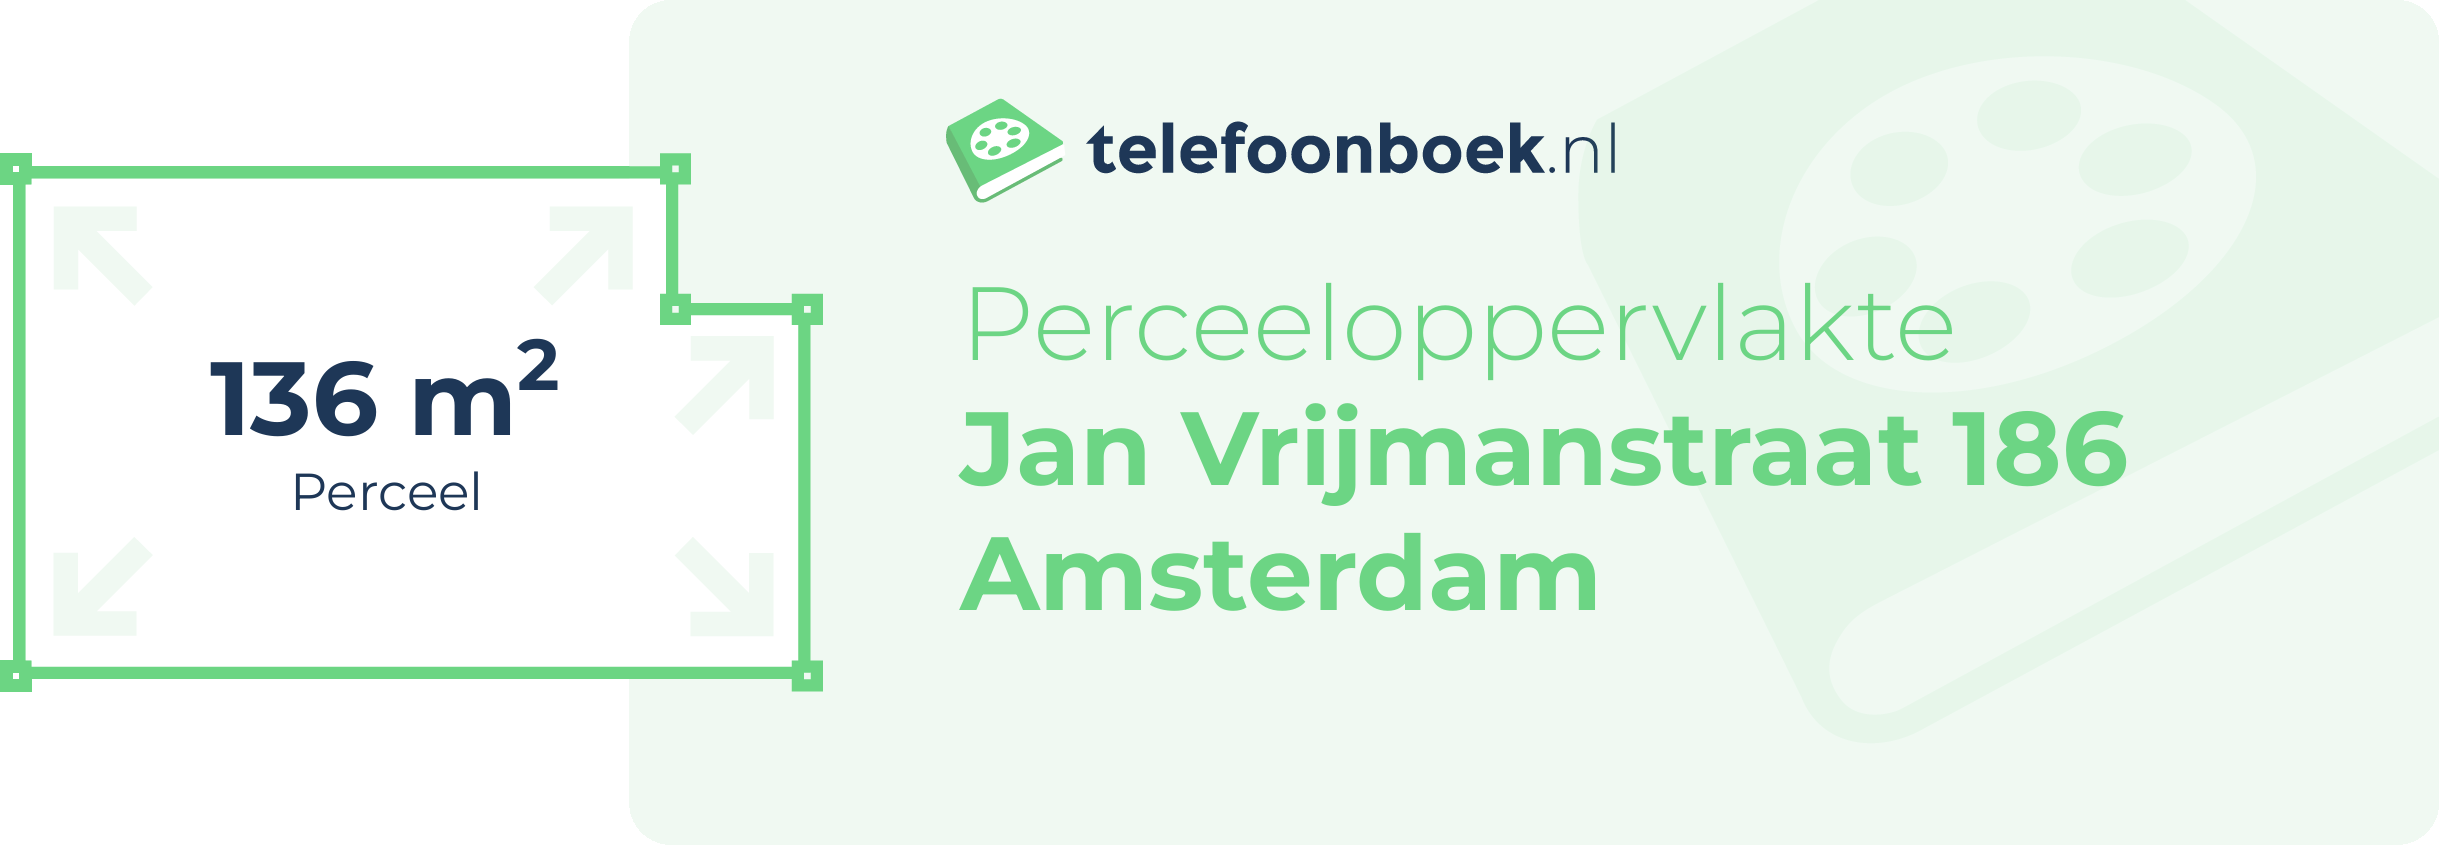 Perceeloppervlakte Jan Vrijmanstraat 186 Amsterdam